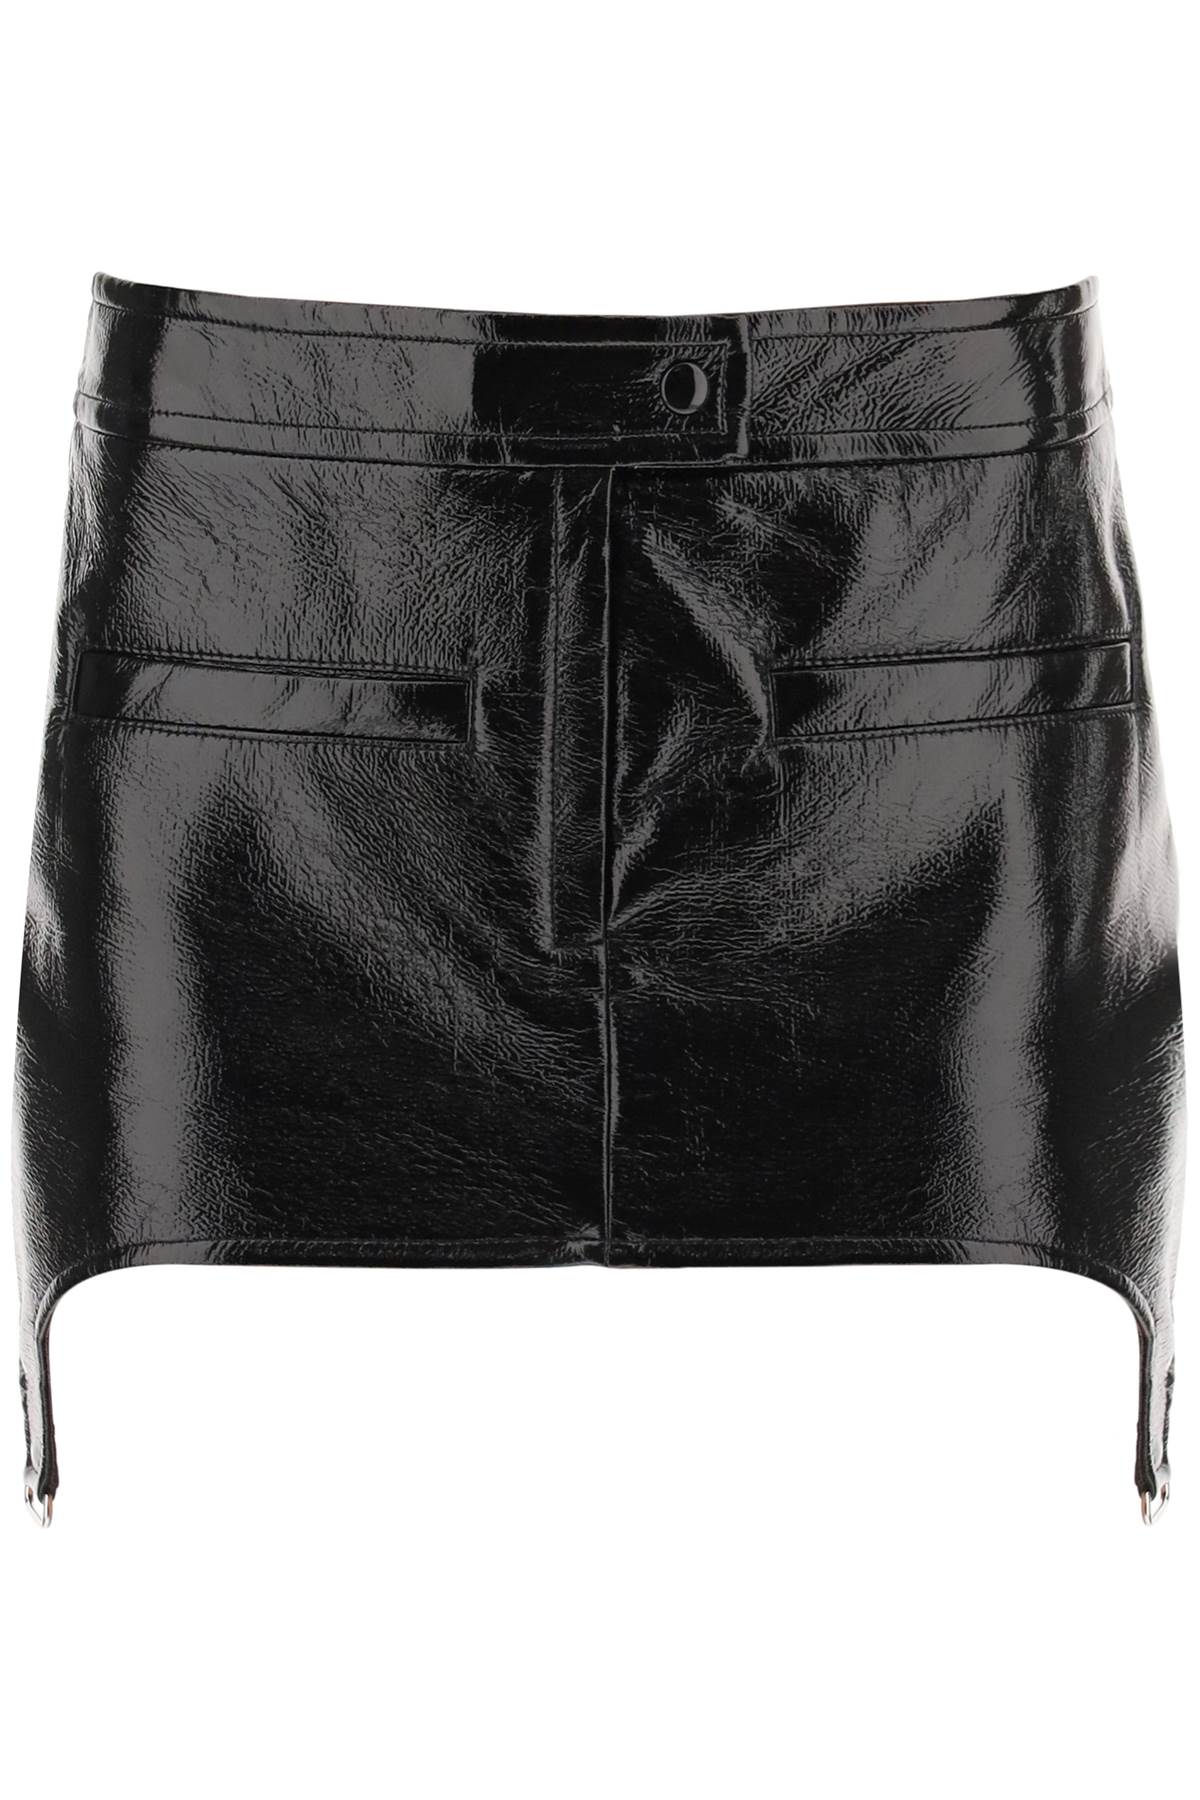 vinyl effect mini skirt with suspenders - Black